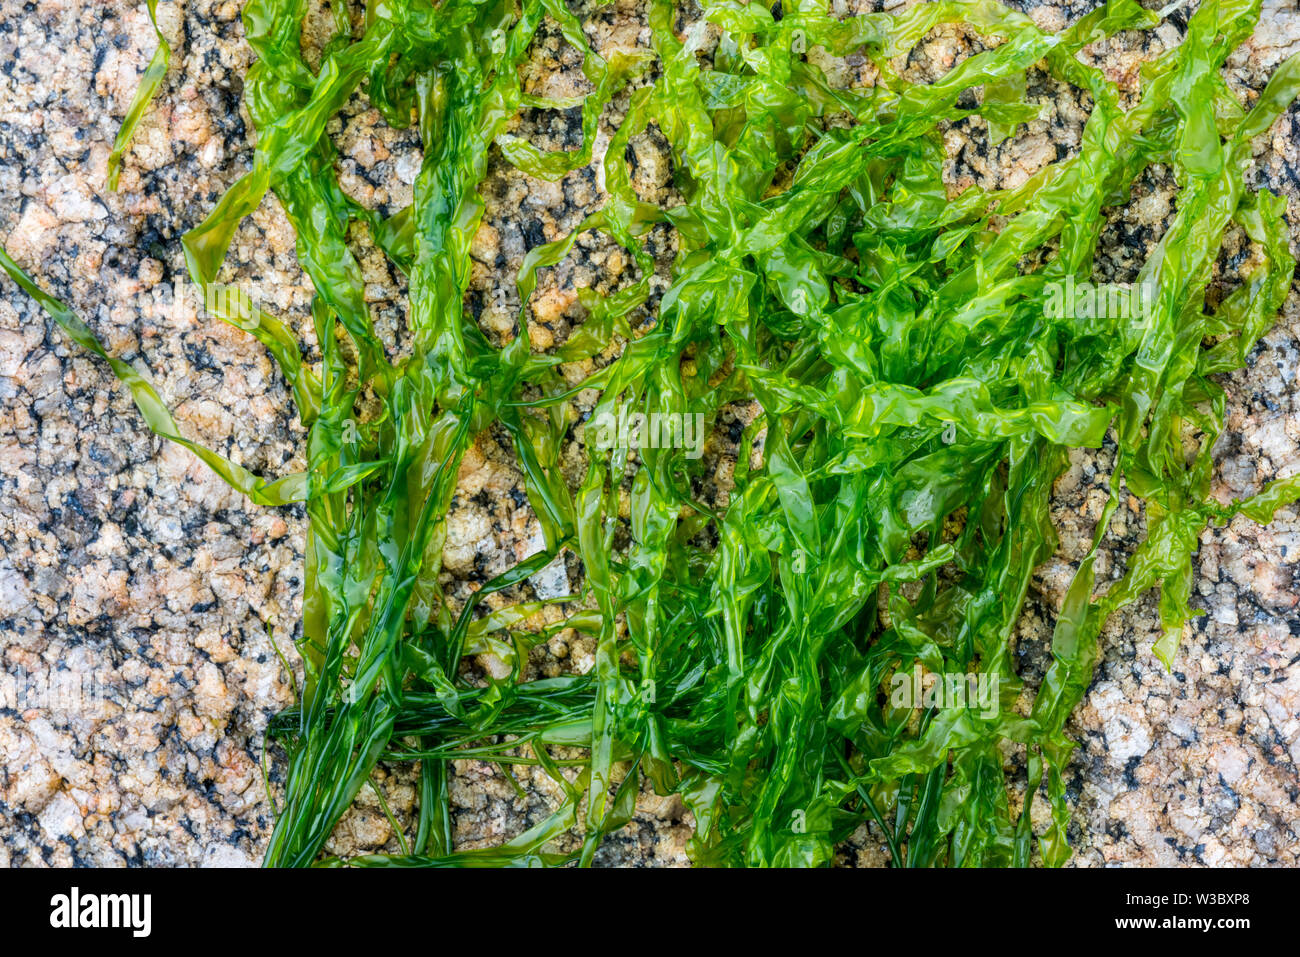 Gutweed / sea lettuce / grass kelp (Ulva intestinalis / Enteromorpha intestinalis) green alga washed on rocky beach Stock Photo